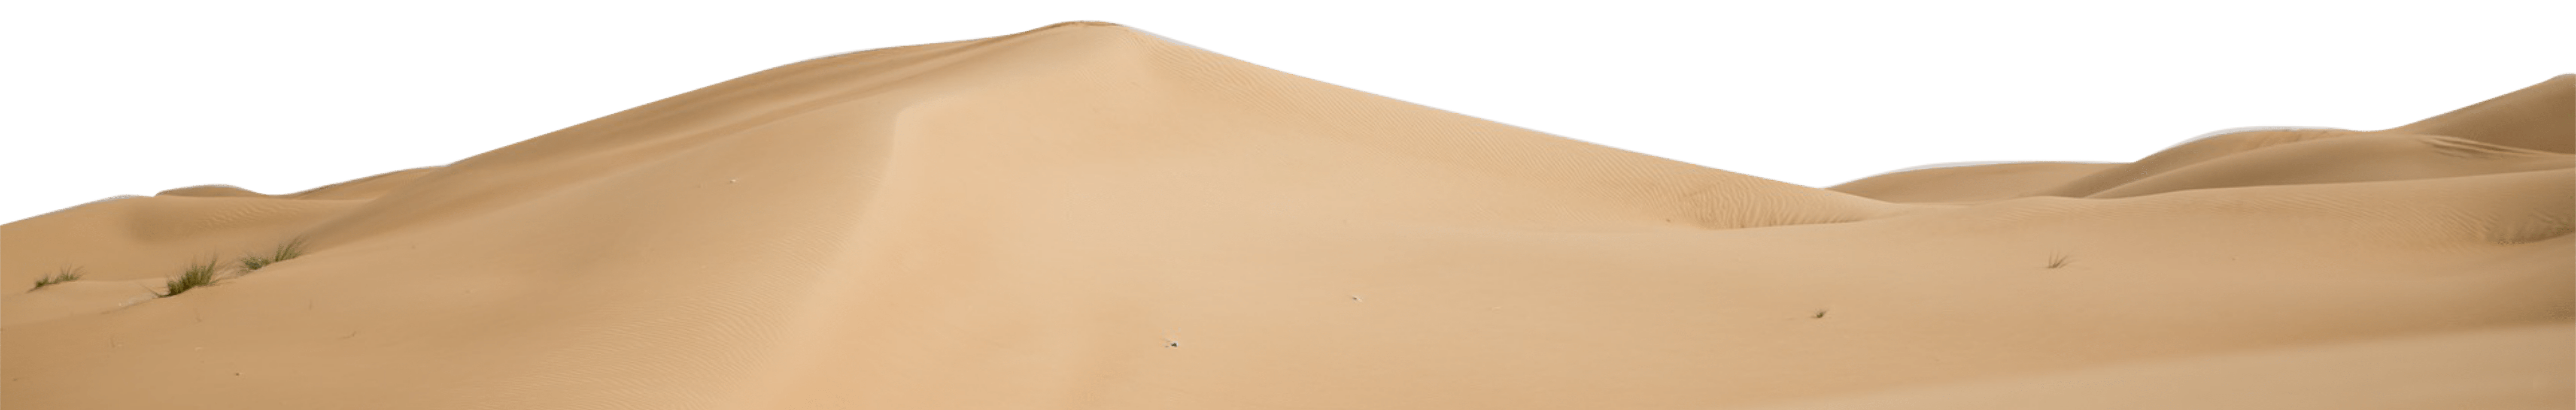 cropped Dunes background 3